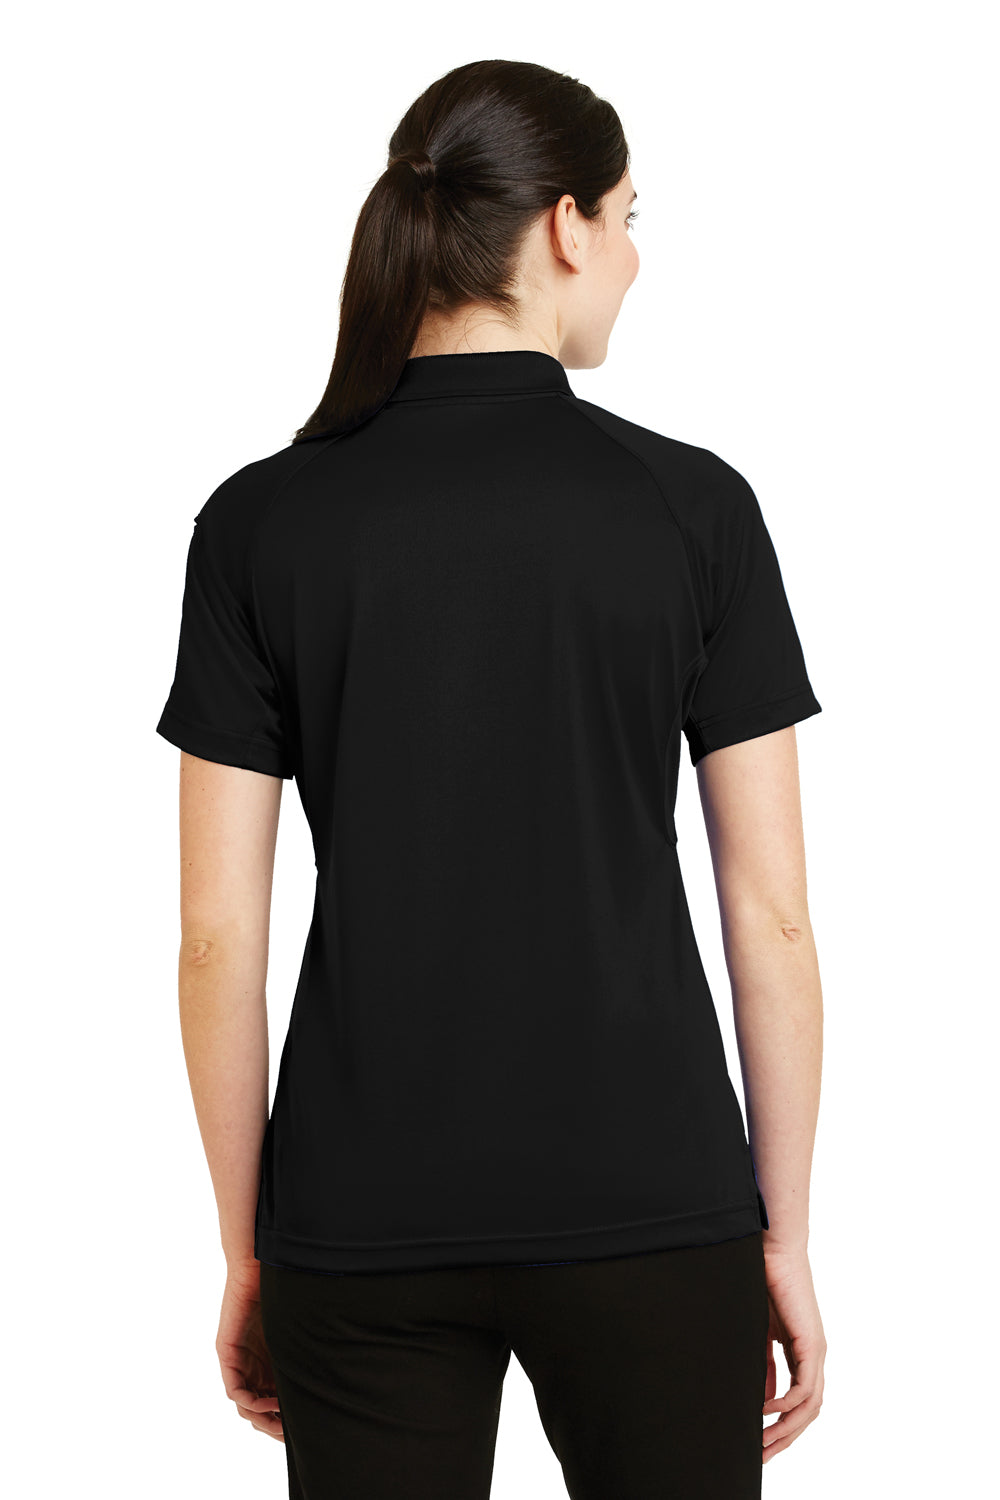 CornerStone CS411 Womens Select Tactical Moisture Wicking Short Sleeve Polo Shirt Black Back